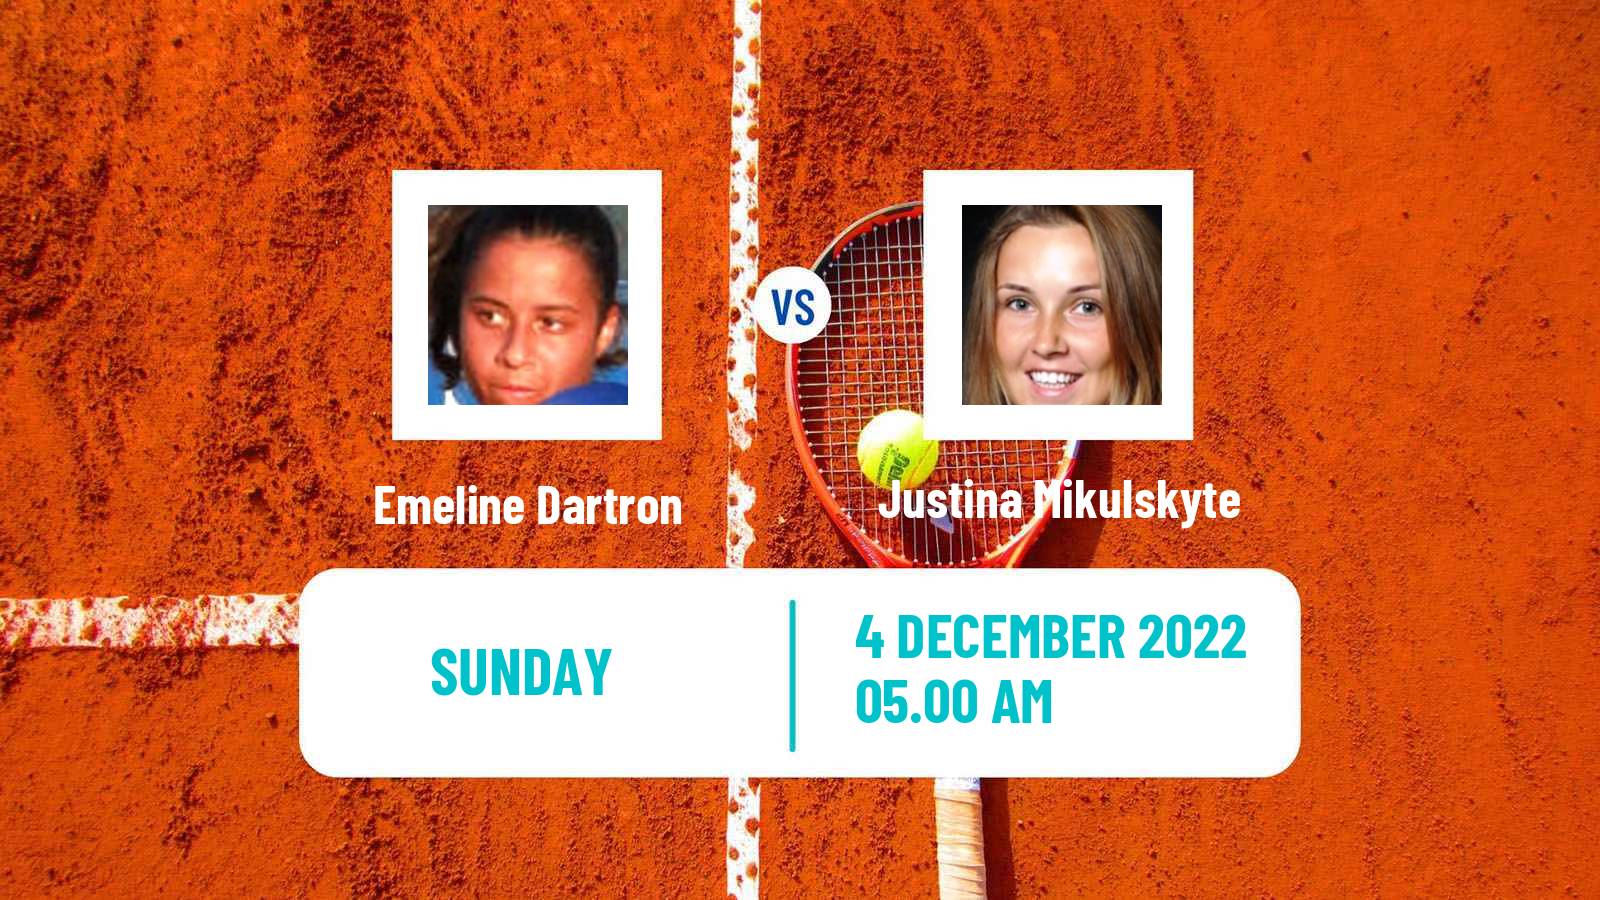 Tennis ATP Challenger Emeline Dartron - Justina Mikulskyte